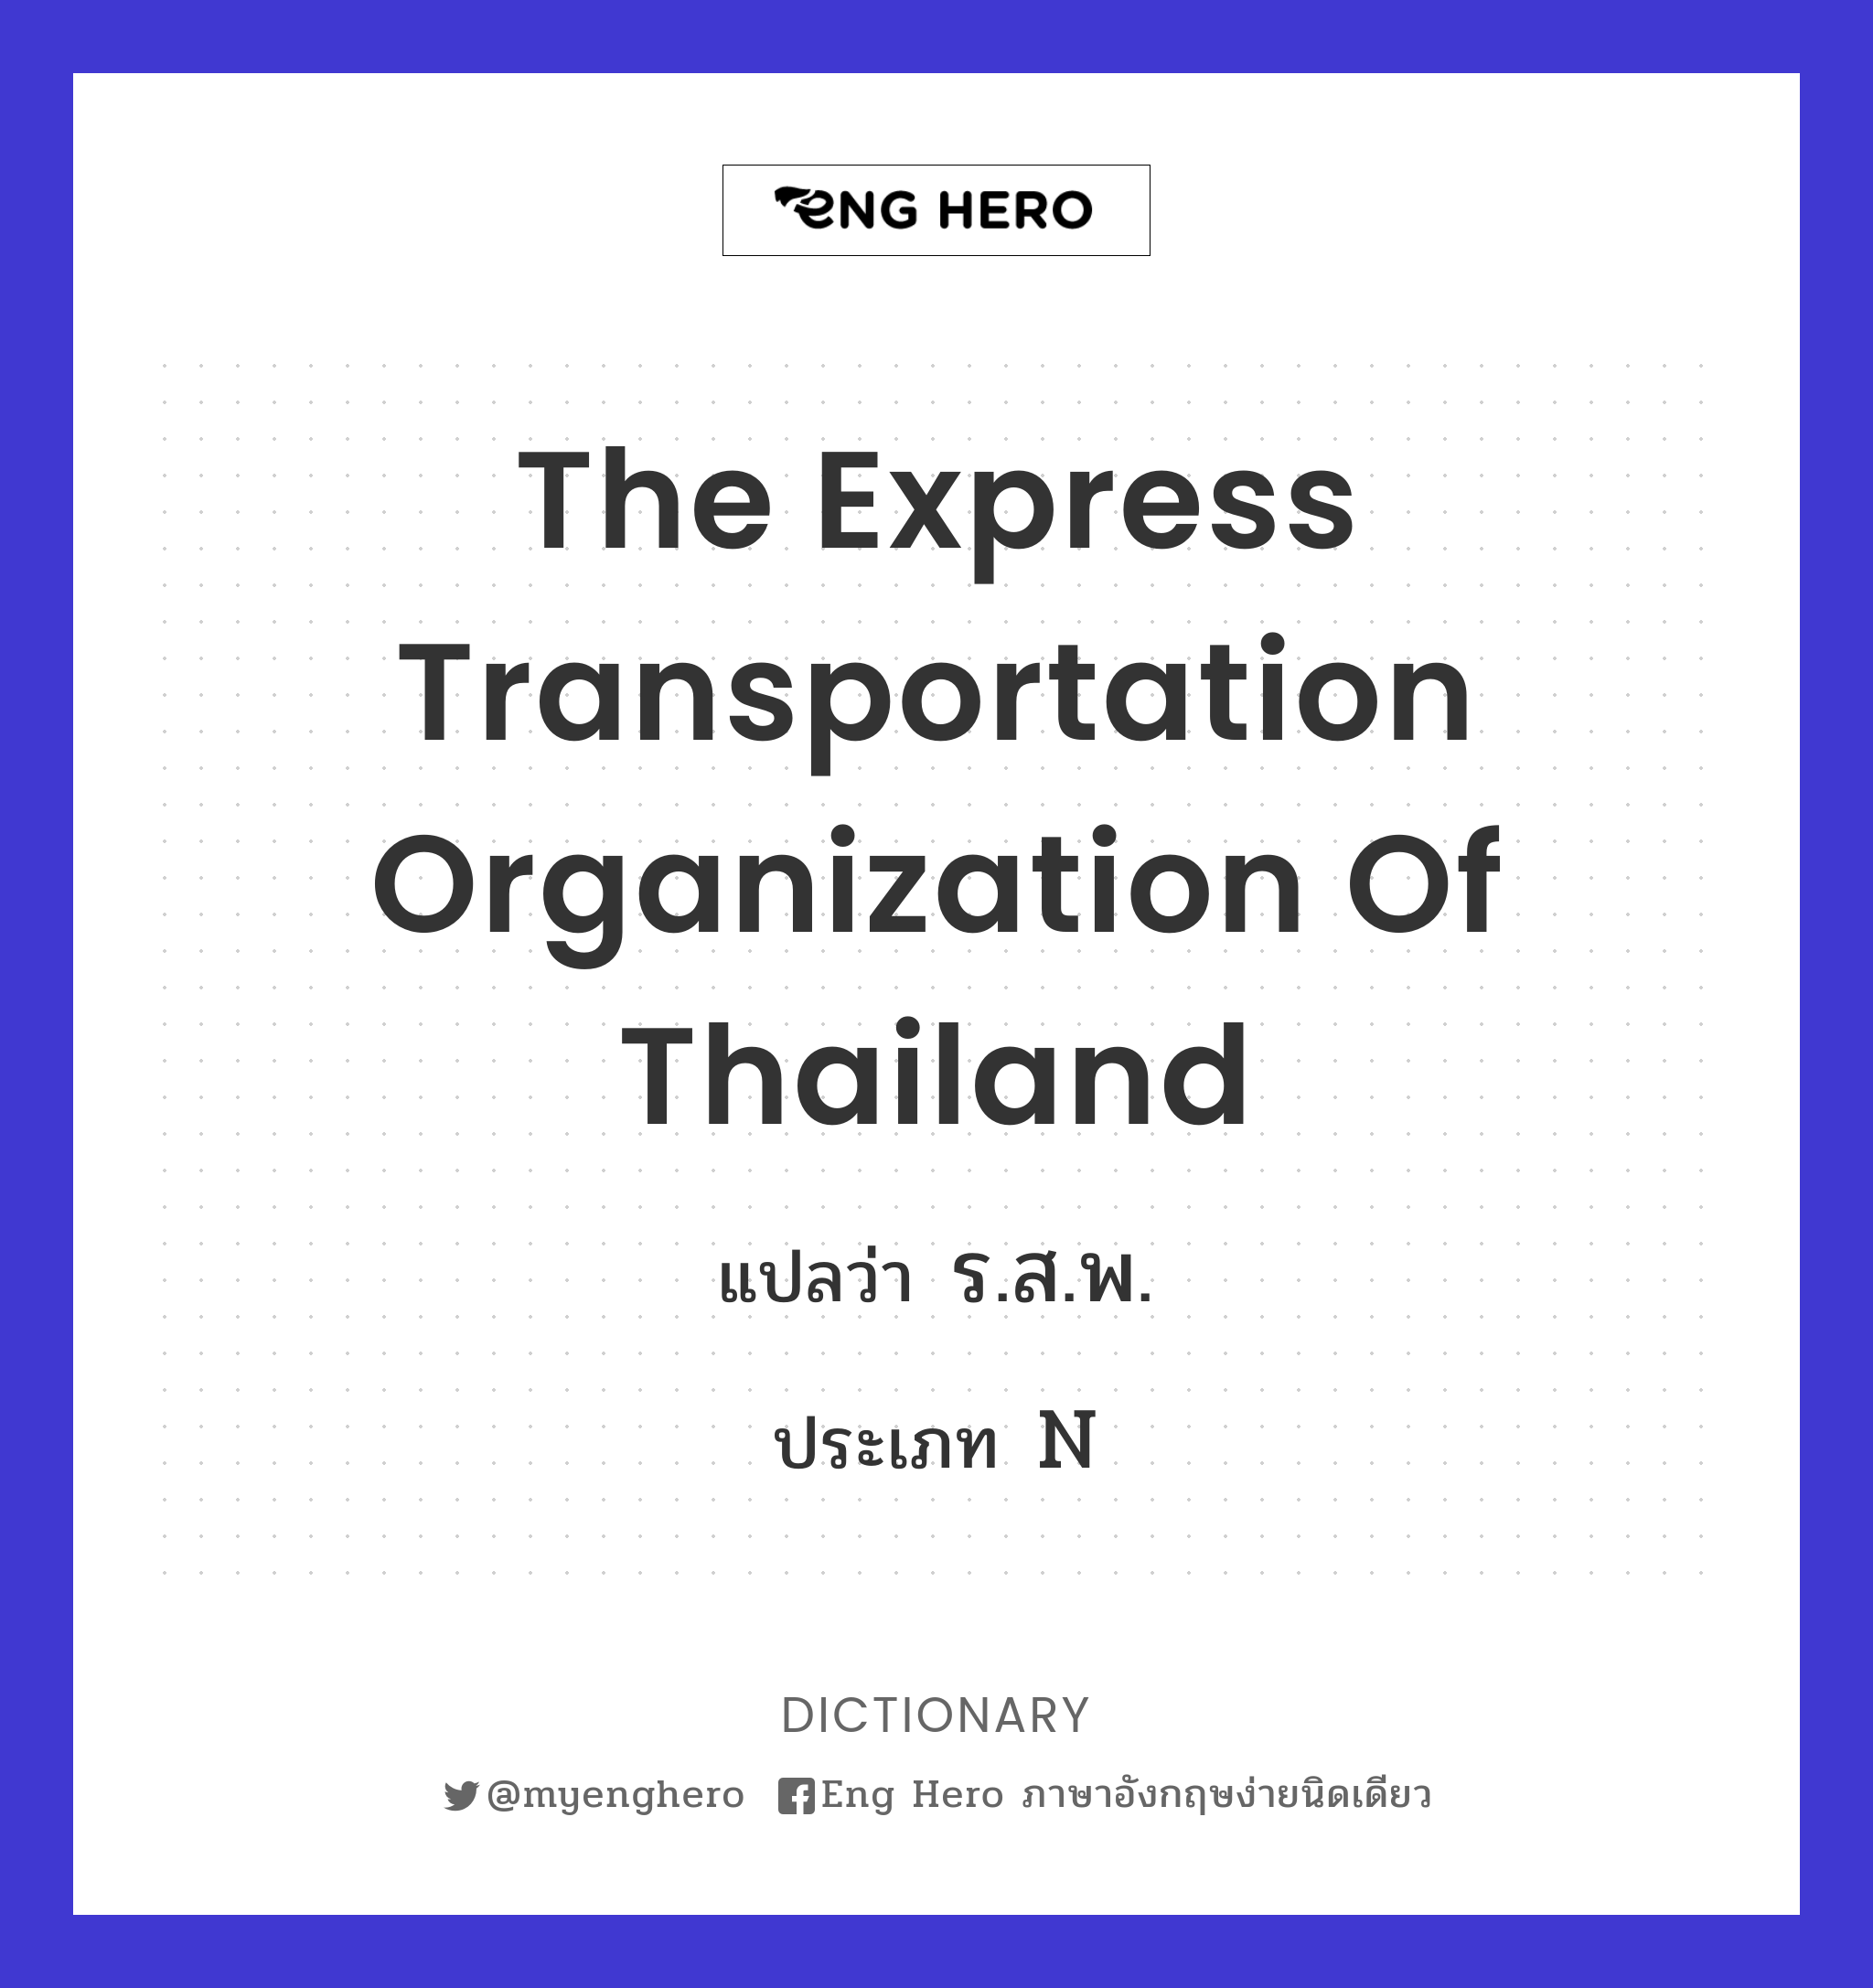 The Express Transportation Organization of Thailand